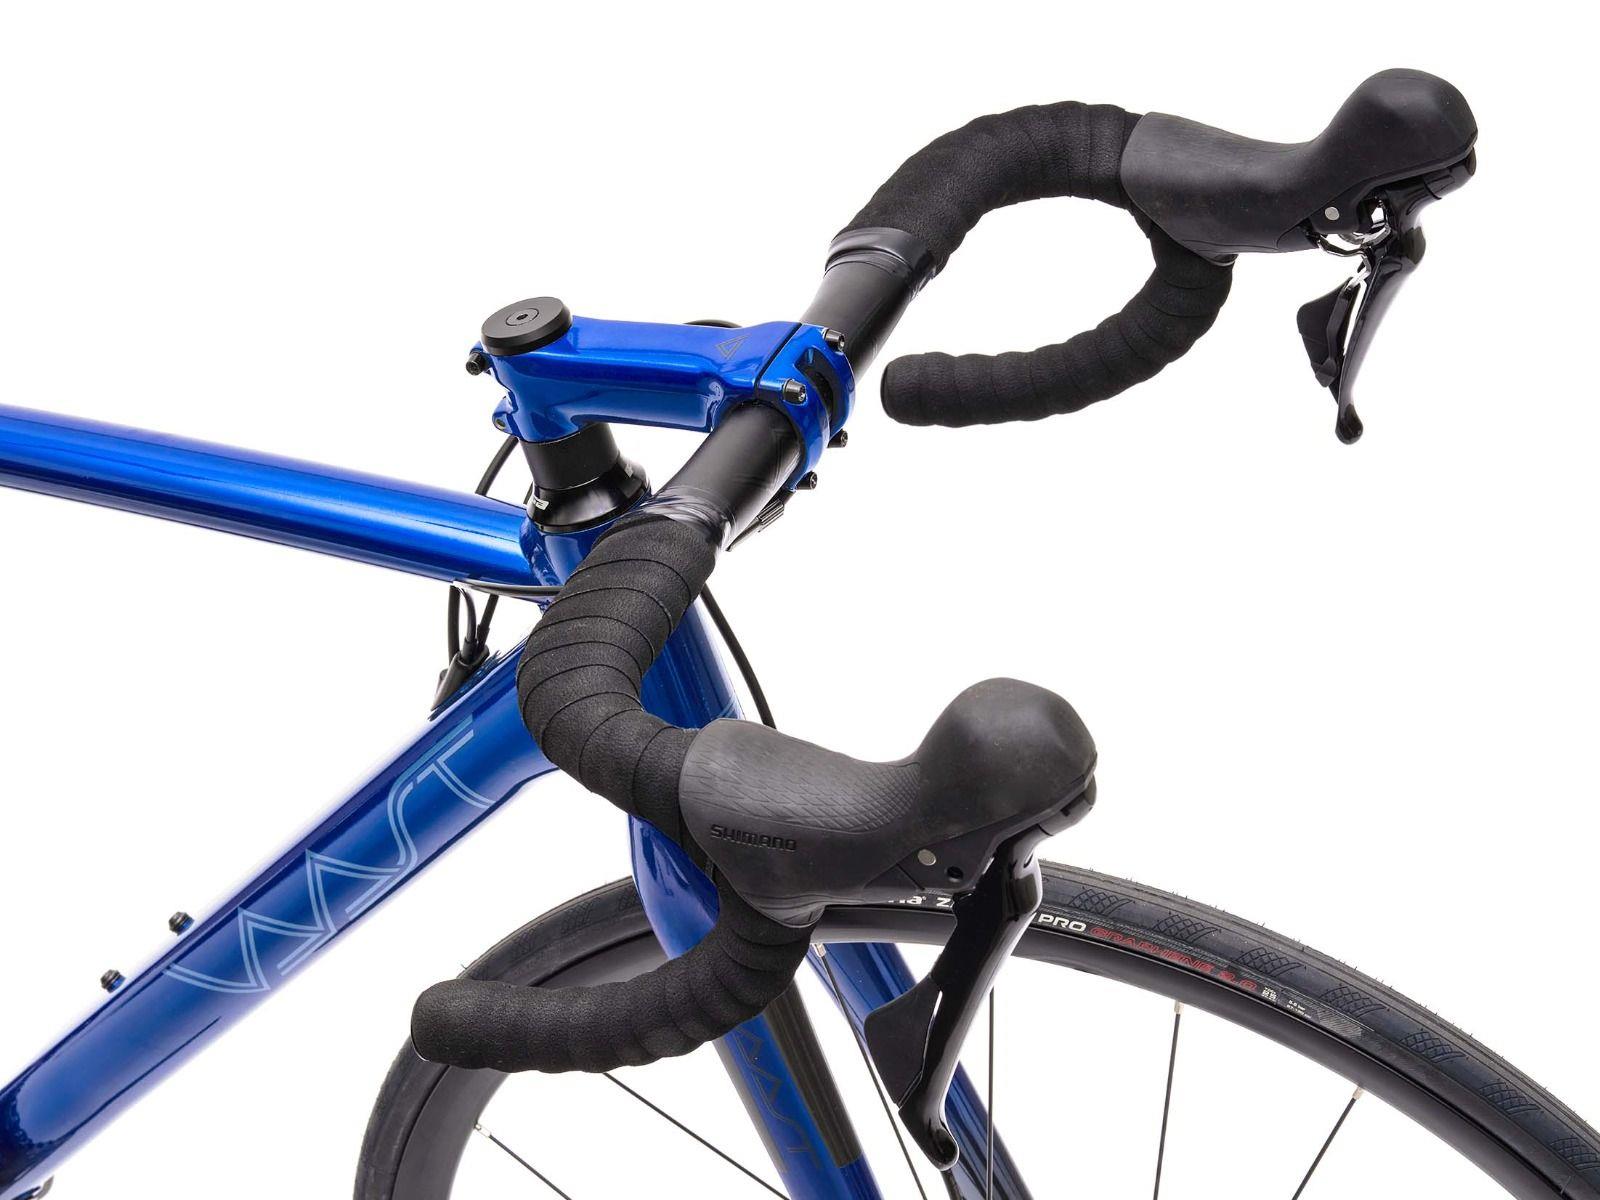 Vaast R/1 700C 105 velosipēds, zils, 58 cm